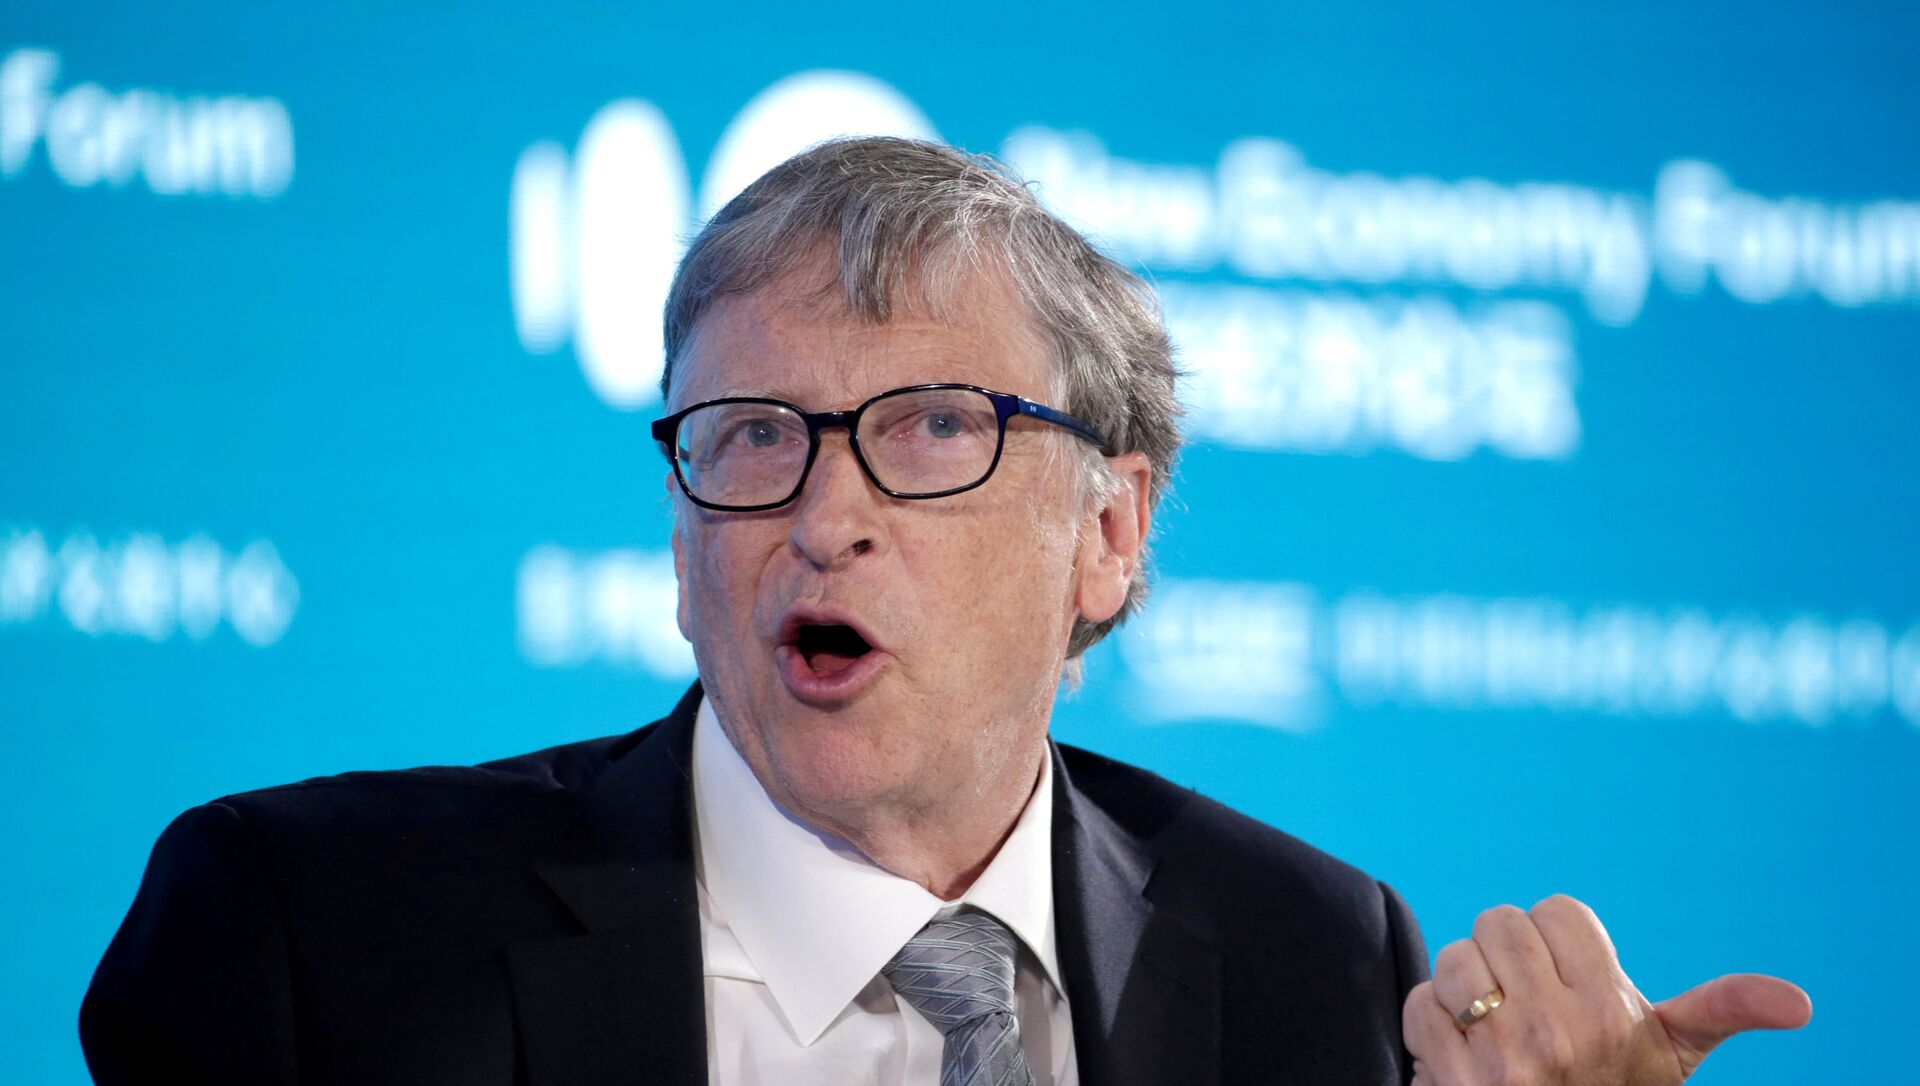 Bill Gates, Co-Chair of Bill & Melinda Gates Foundation, attends a conversation at the 2019 New Economy Forum in Beijing, China November 21, 2019 - Sputnik International, 1920, 26.02.2021